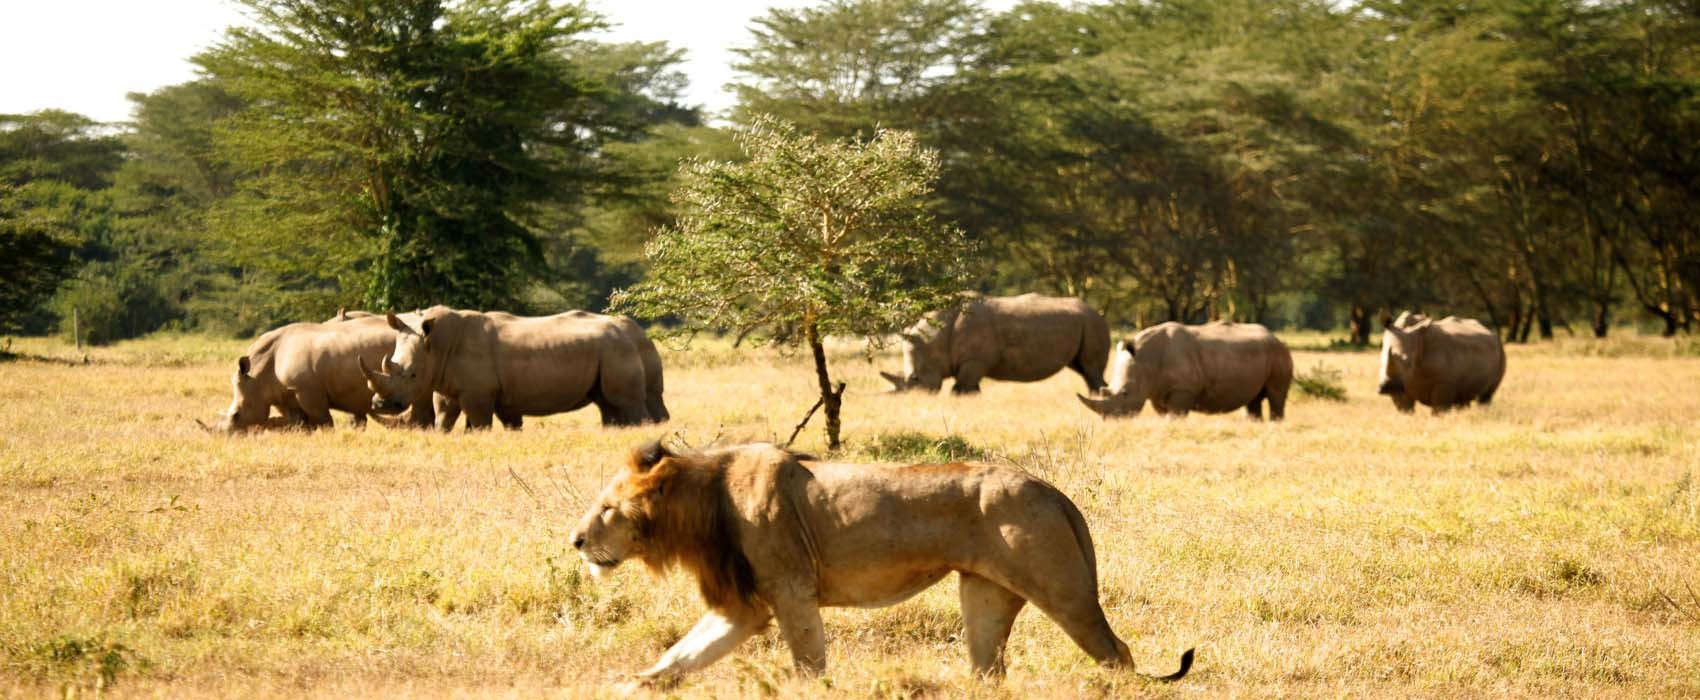 Wildlife safari africa